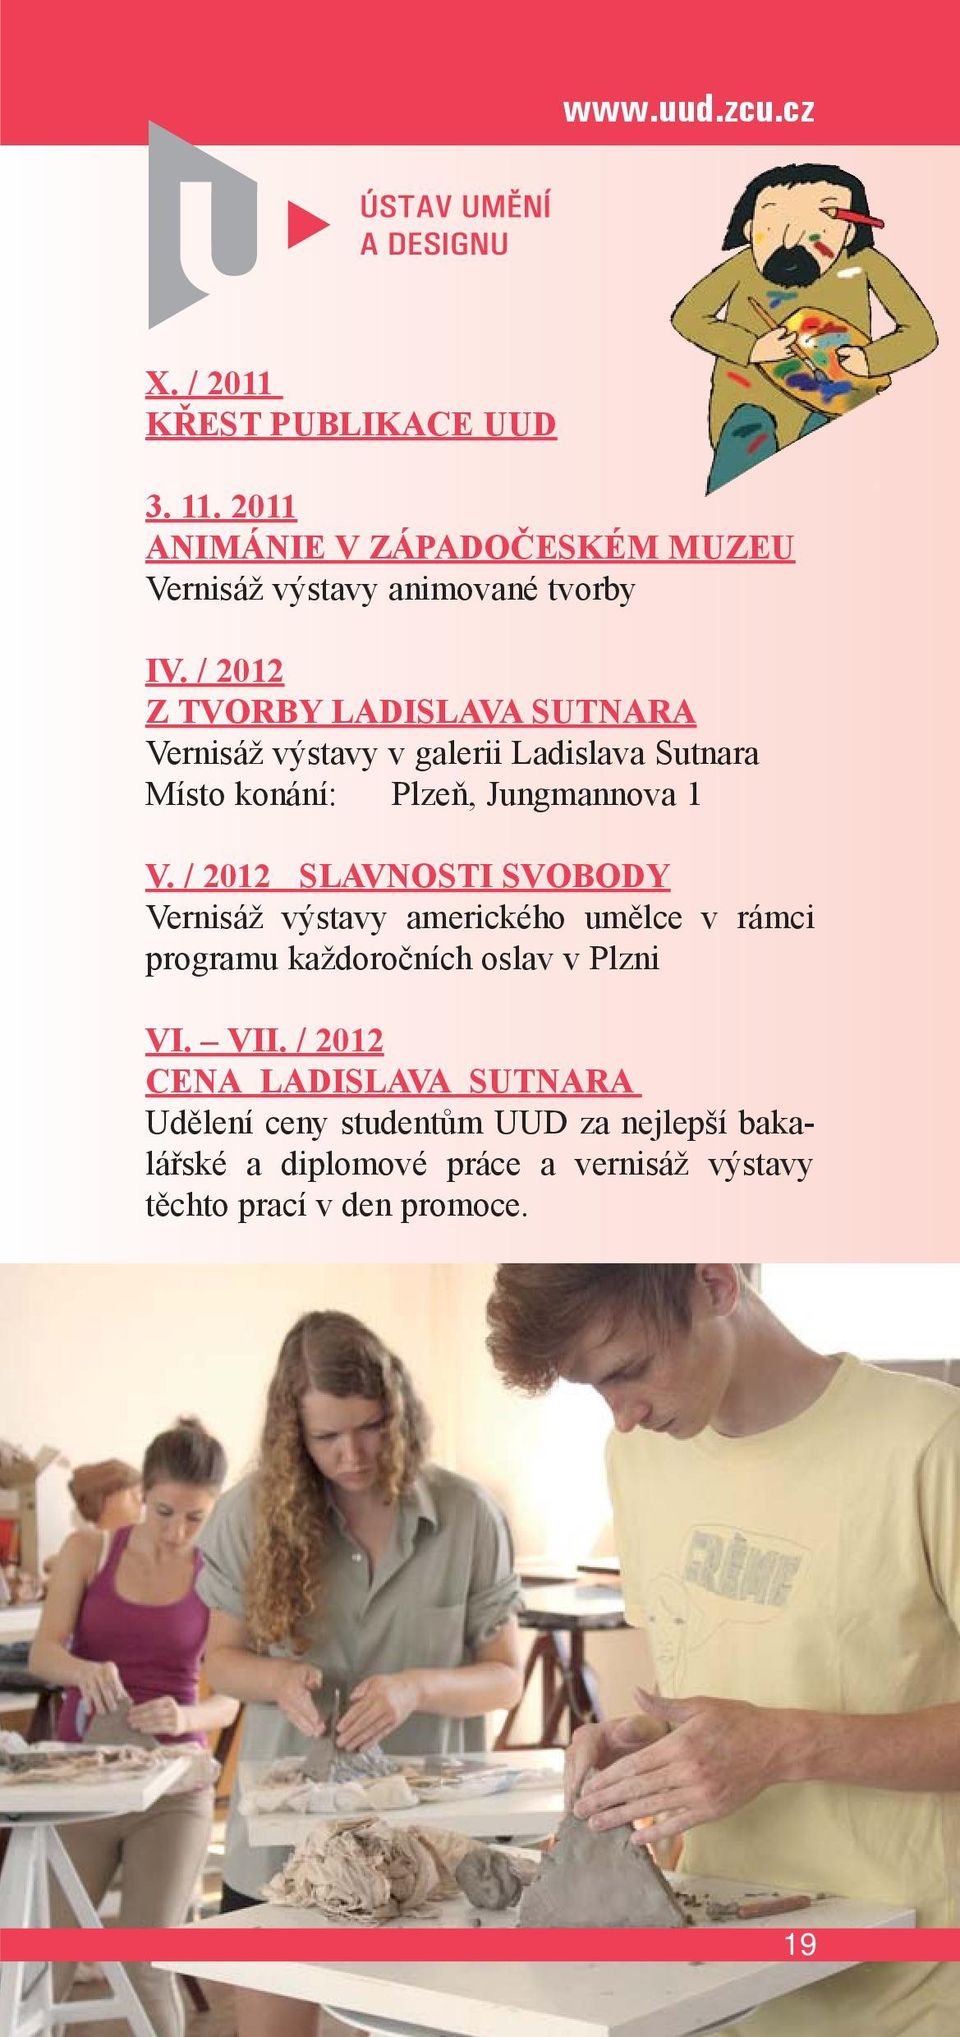 / 2012 SLAVNOSTI SVOBODY Vernisáž výstavy amerického umělce v rámci programu každoročních oslav v Plzni VI. VII.